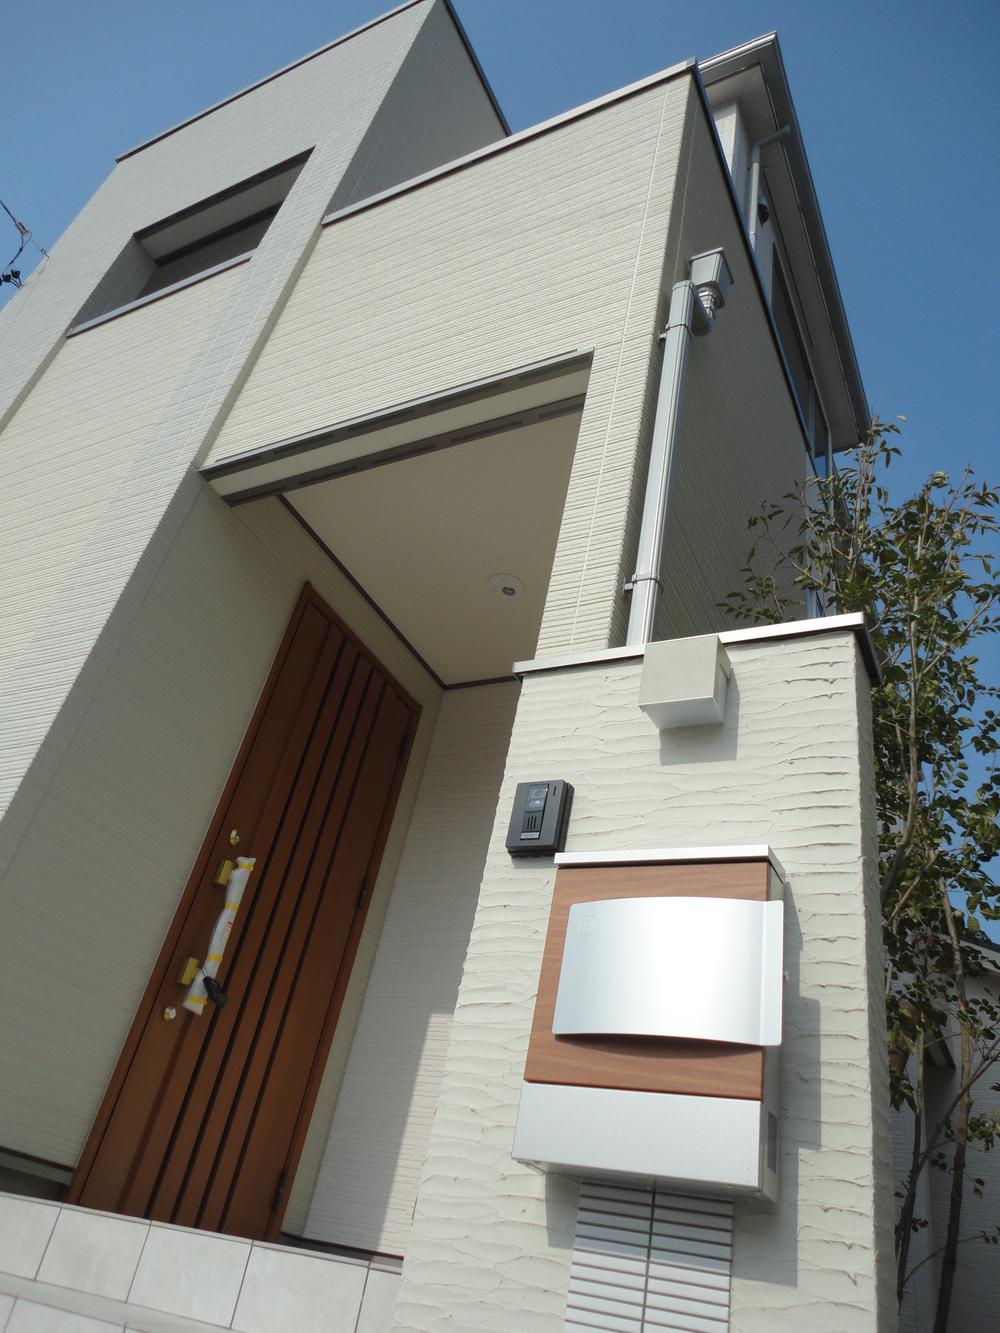 Building plan example (exterior photos). Building plan example (No. 1 place) building price 22,400,000 yen, Building area 116.60 sq m